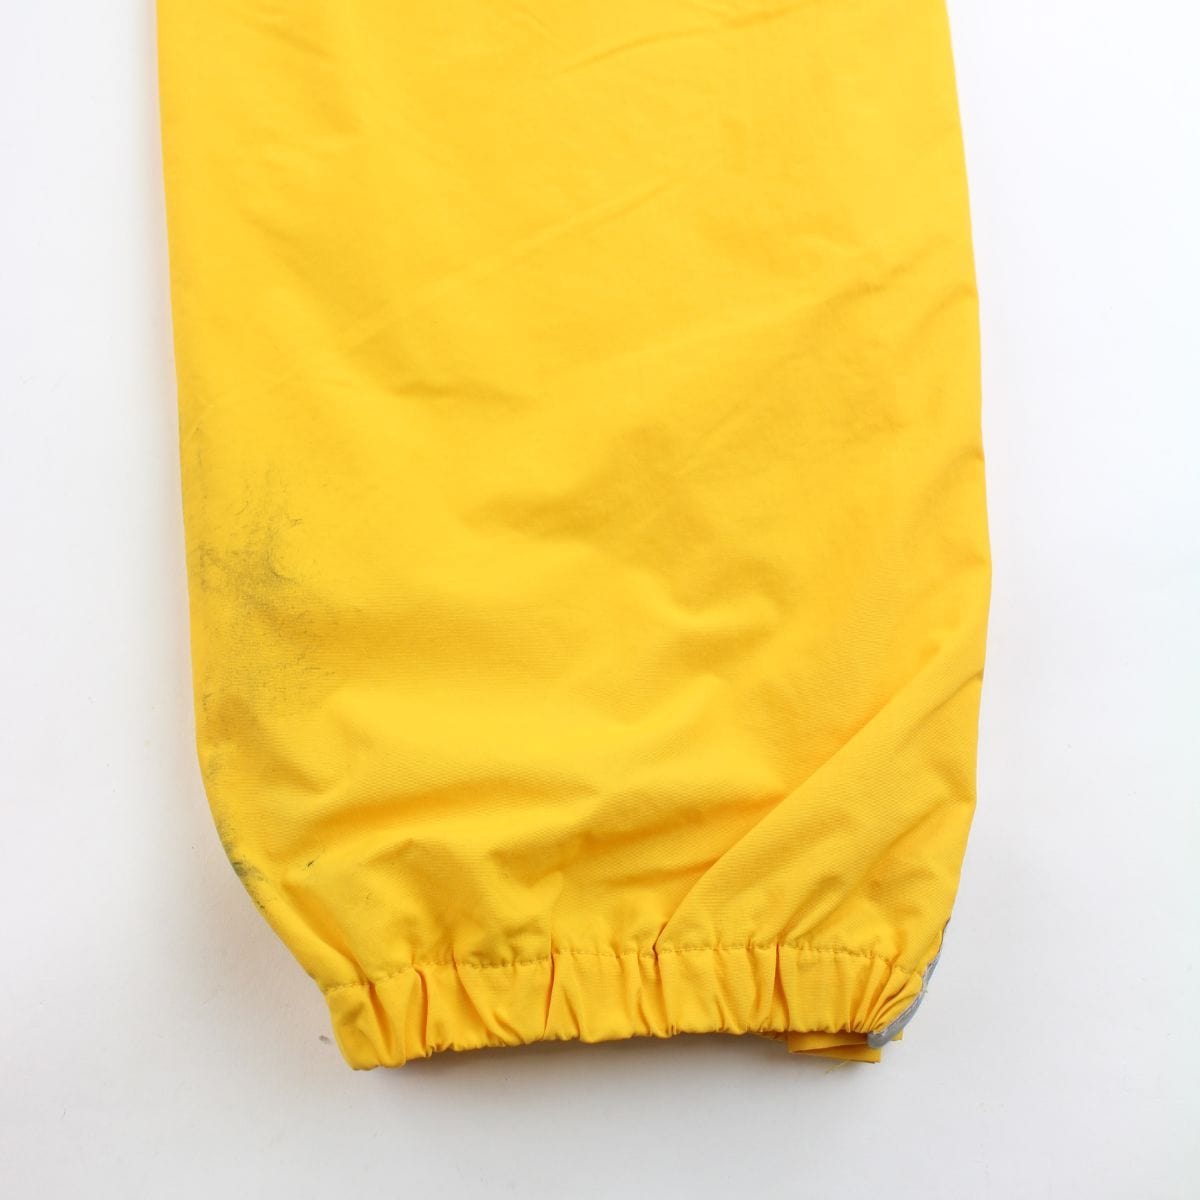 supreme 3m strip track pants yellow - SaruGeneral